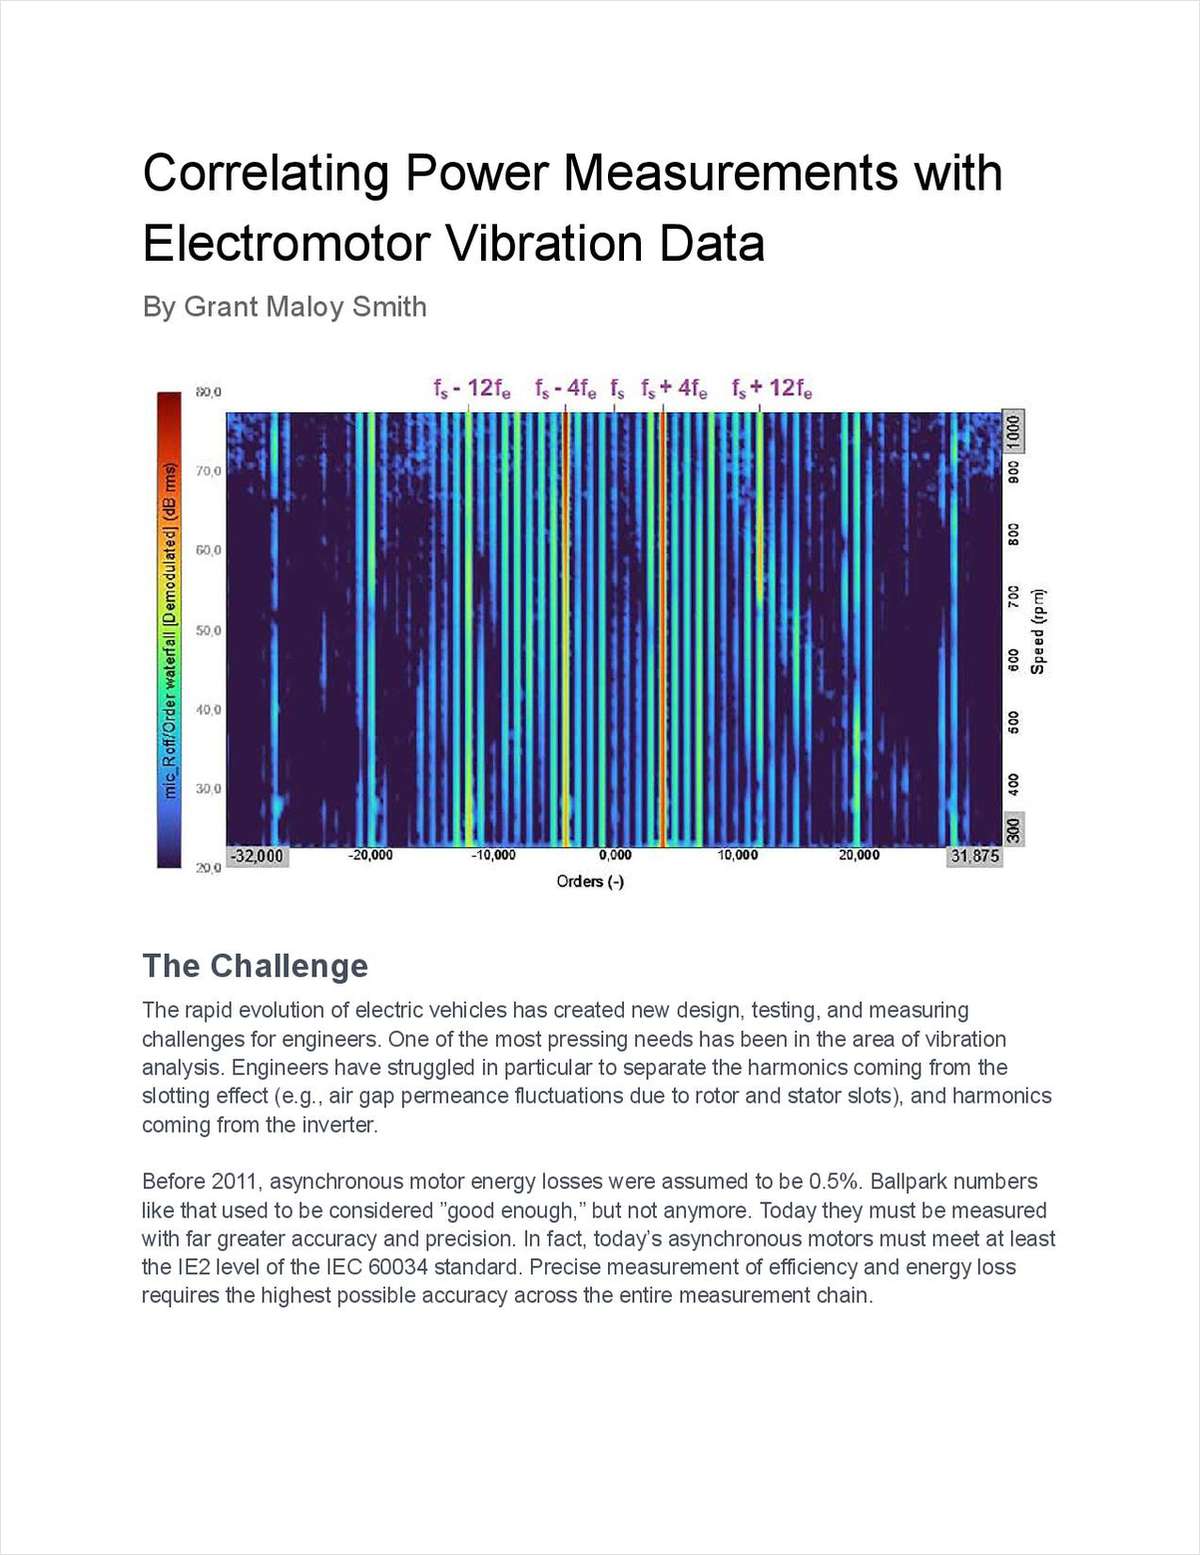 Correlating Power Measurements with Electromotor Vibration Data